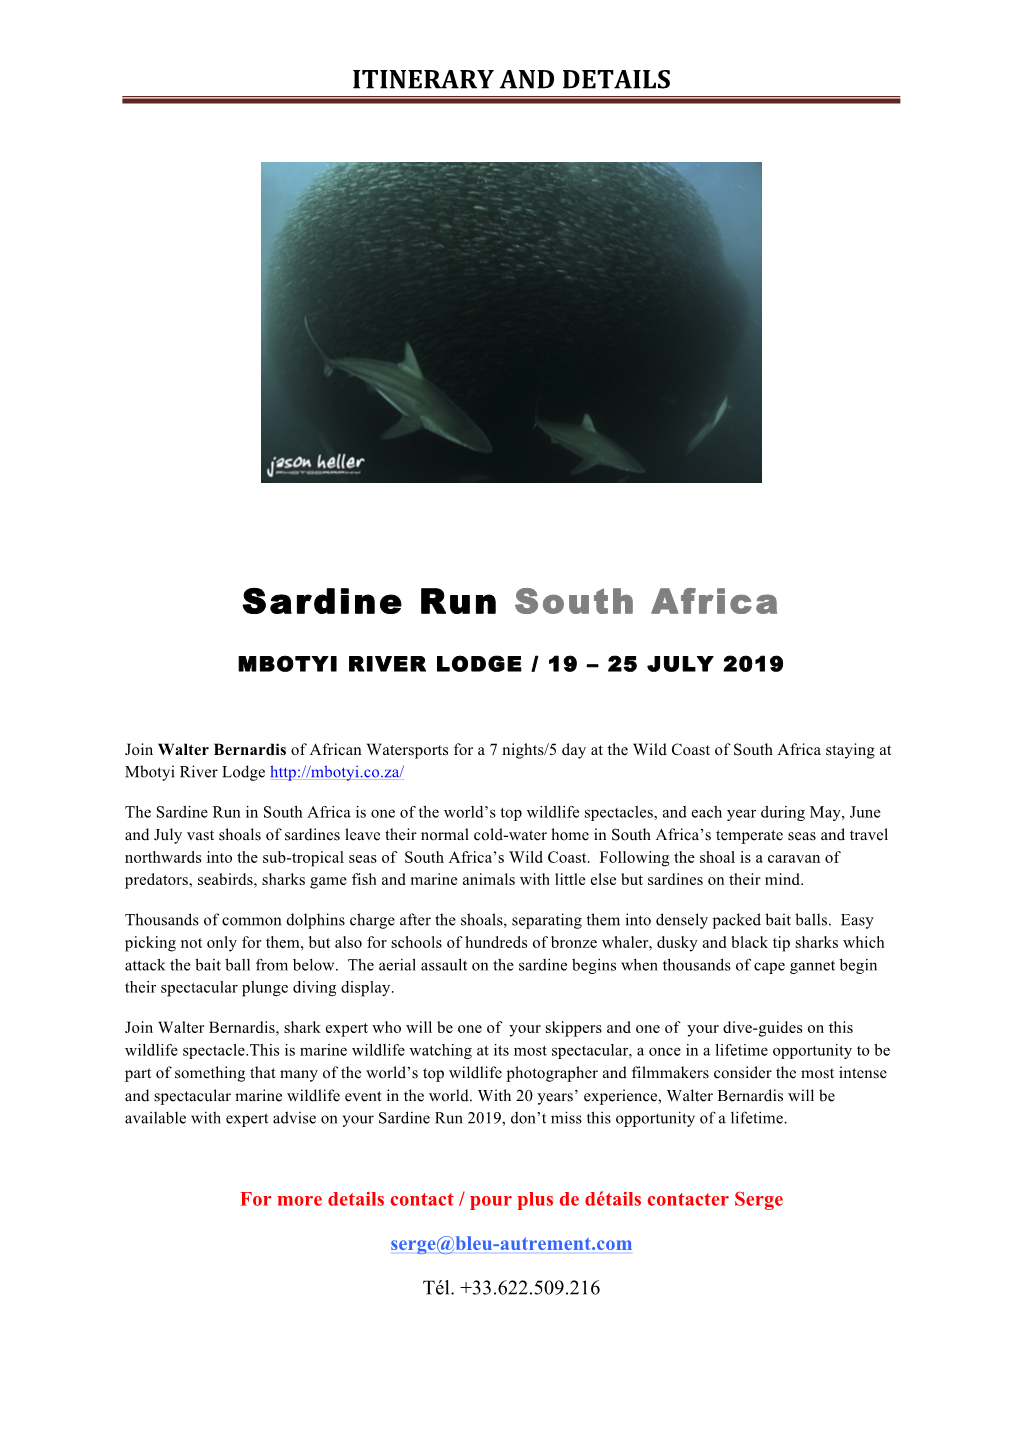 Sardine Run South Africa